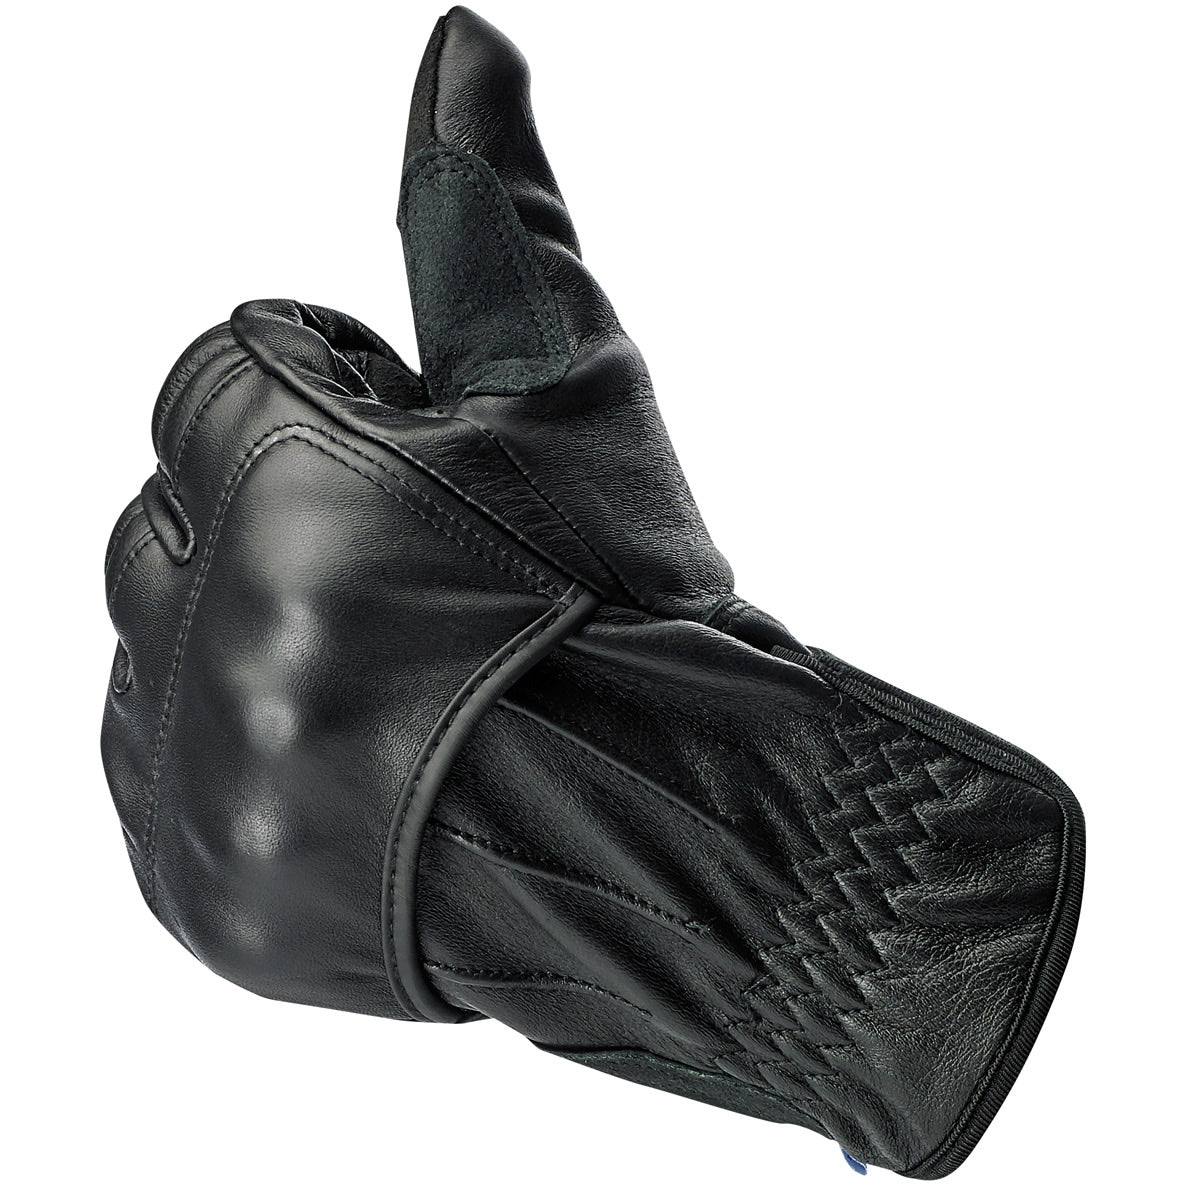 Biltwell Work Gloves (Black, Large)